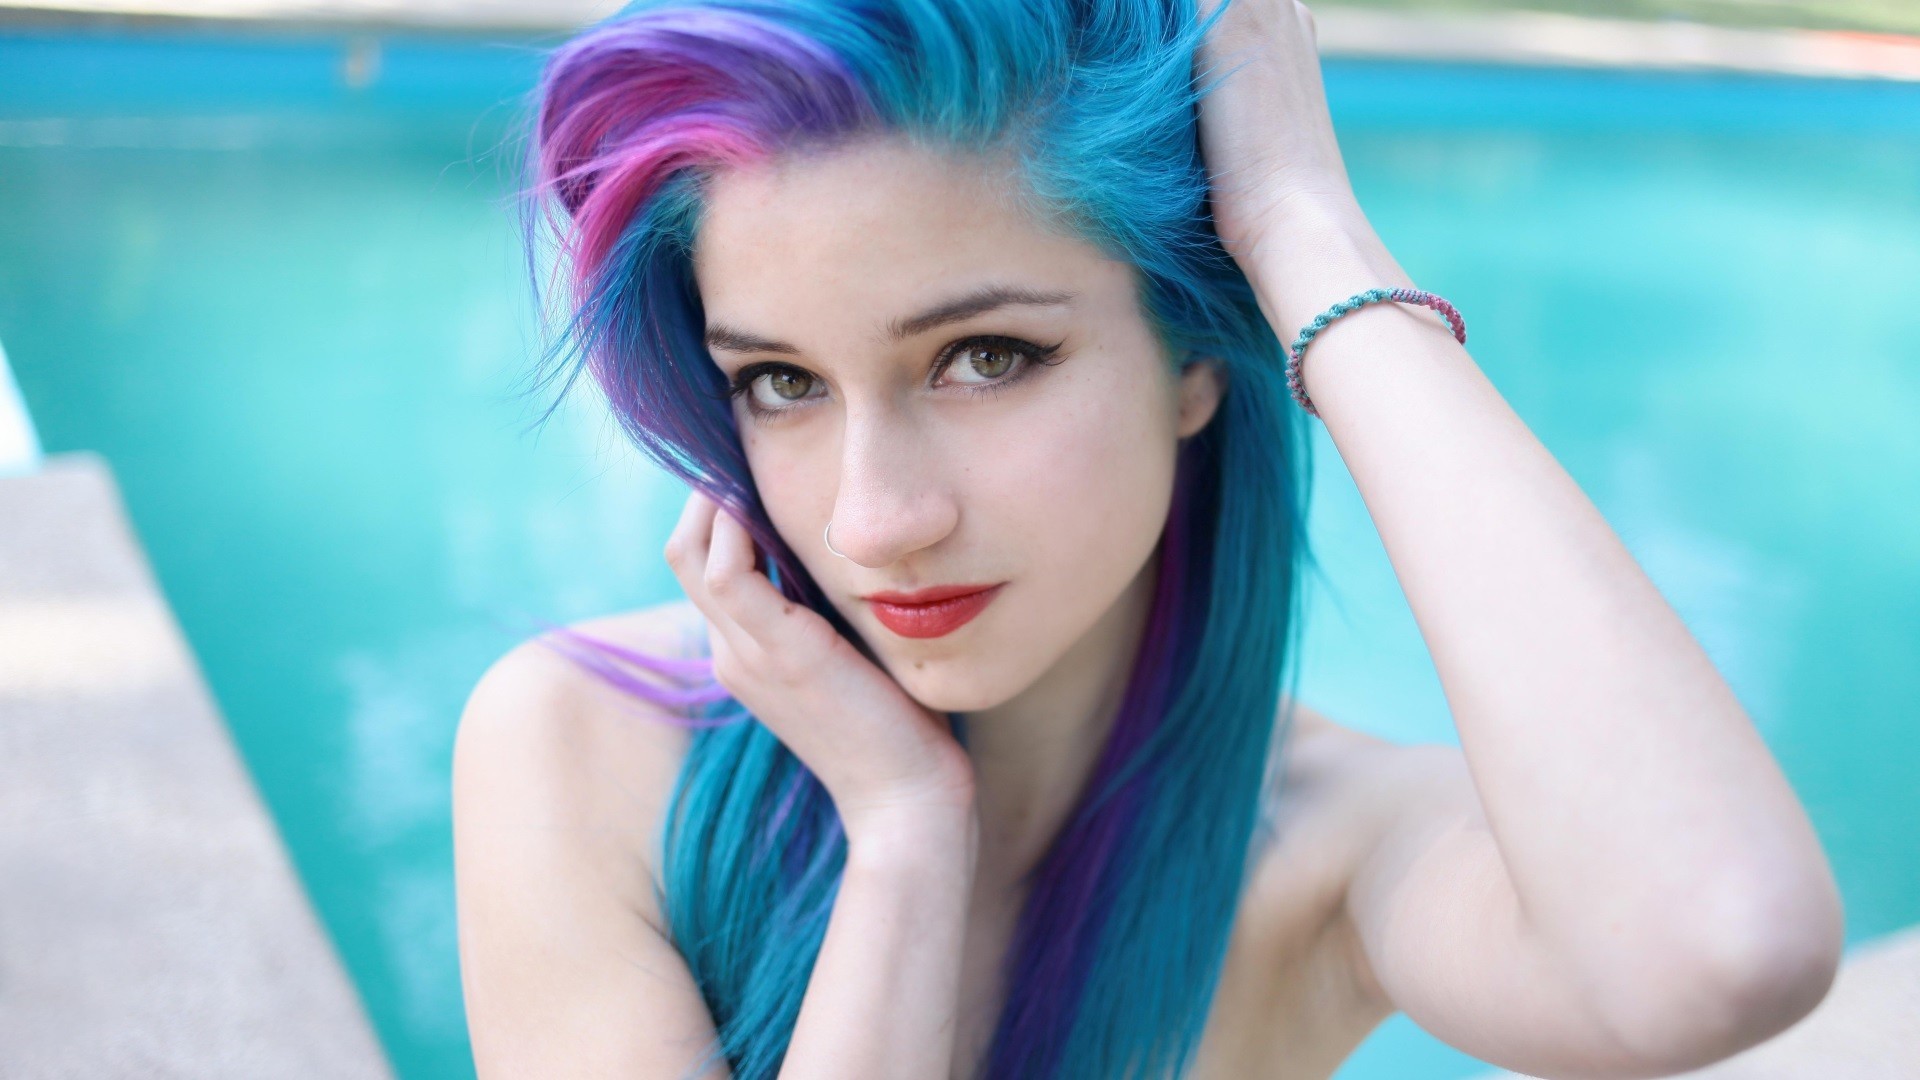 Blue hair alternative girl - wide 1